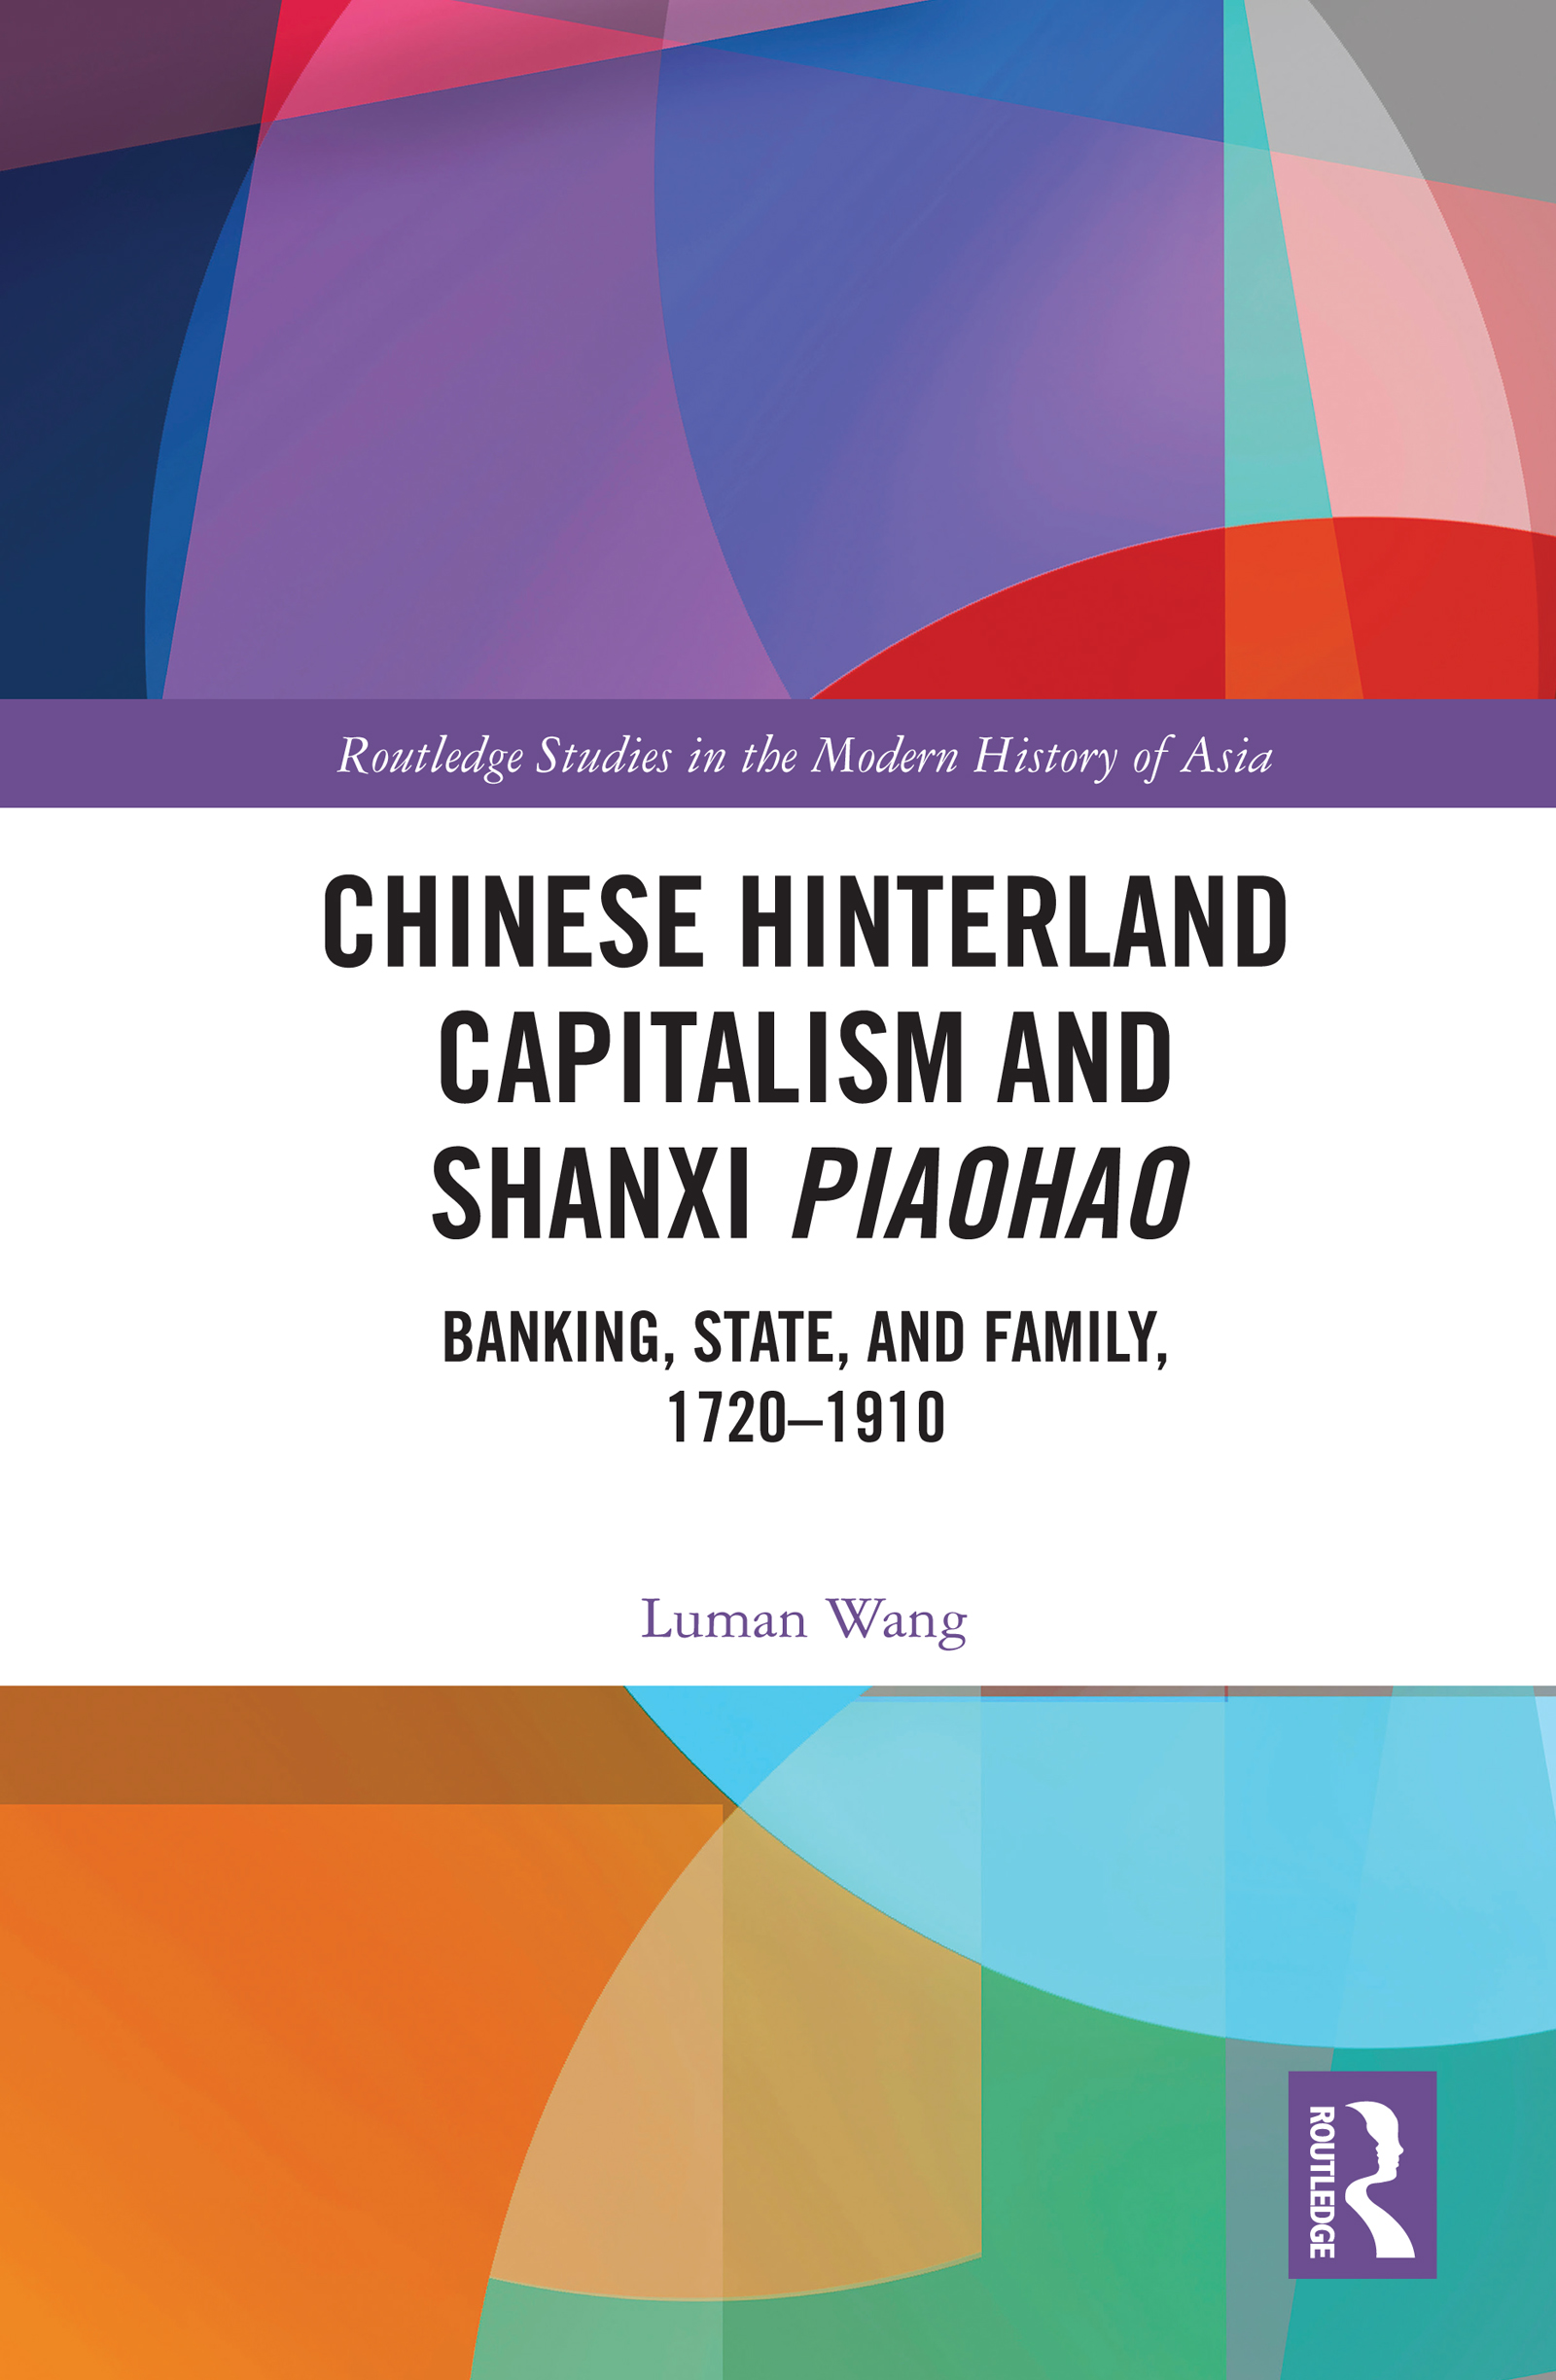 Chinese Hinterland Capitalism and Shanxi Piaohao